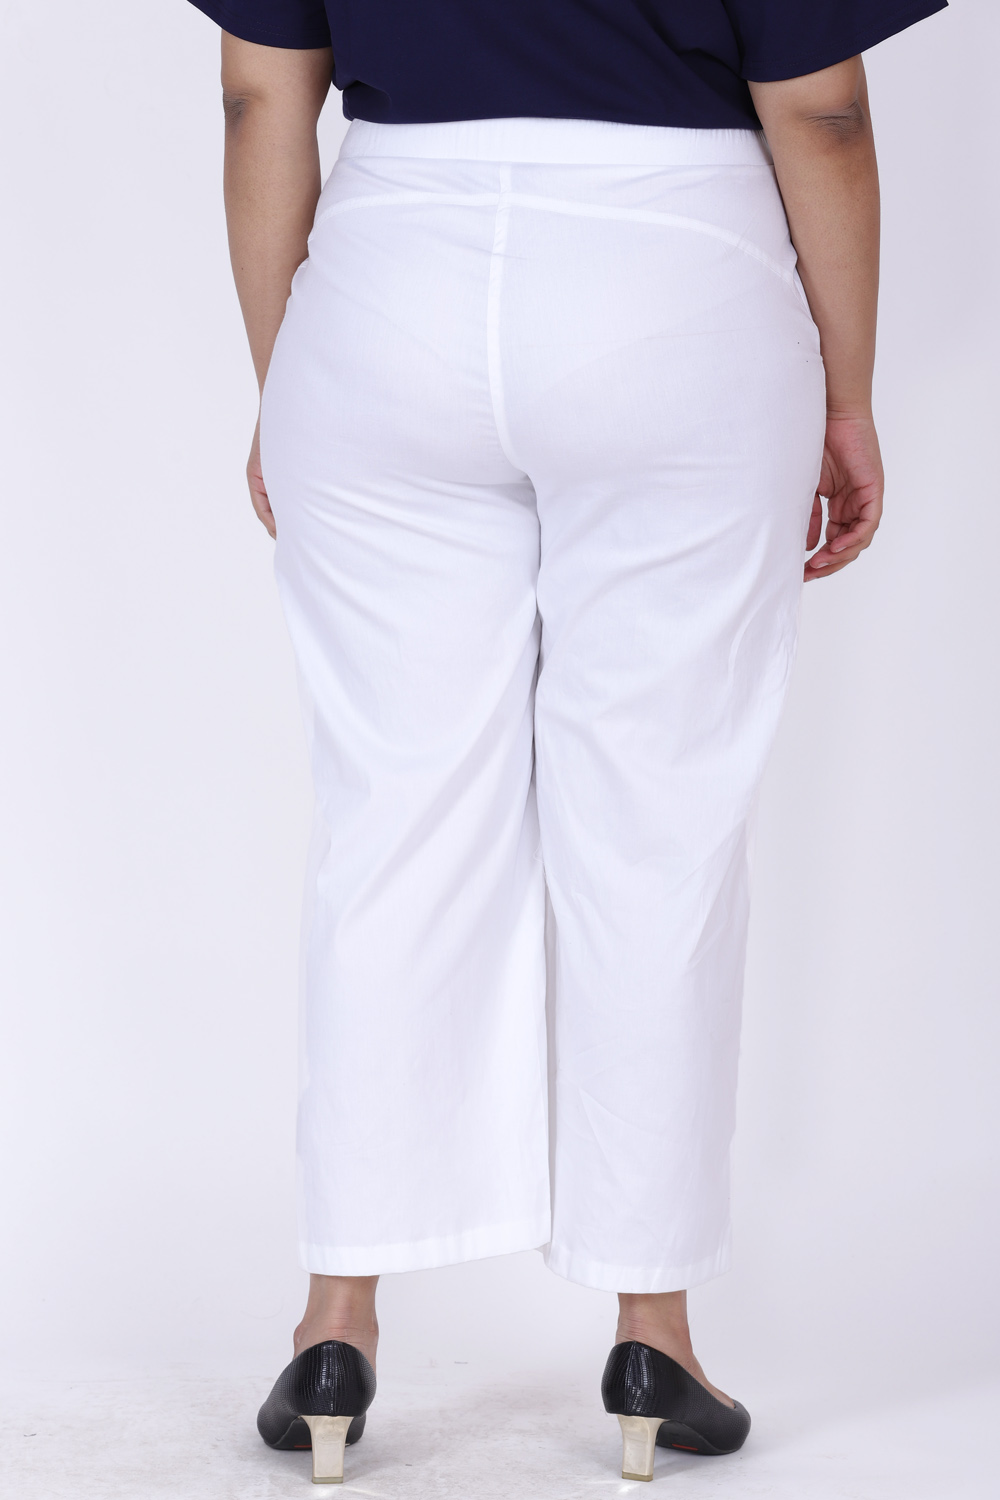 Womens Plus Size Jeans Look Skinny Slim Jeggings Stretch Pants XL-3XL 14-28  New | eBay